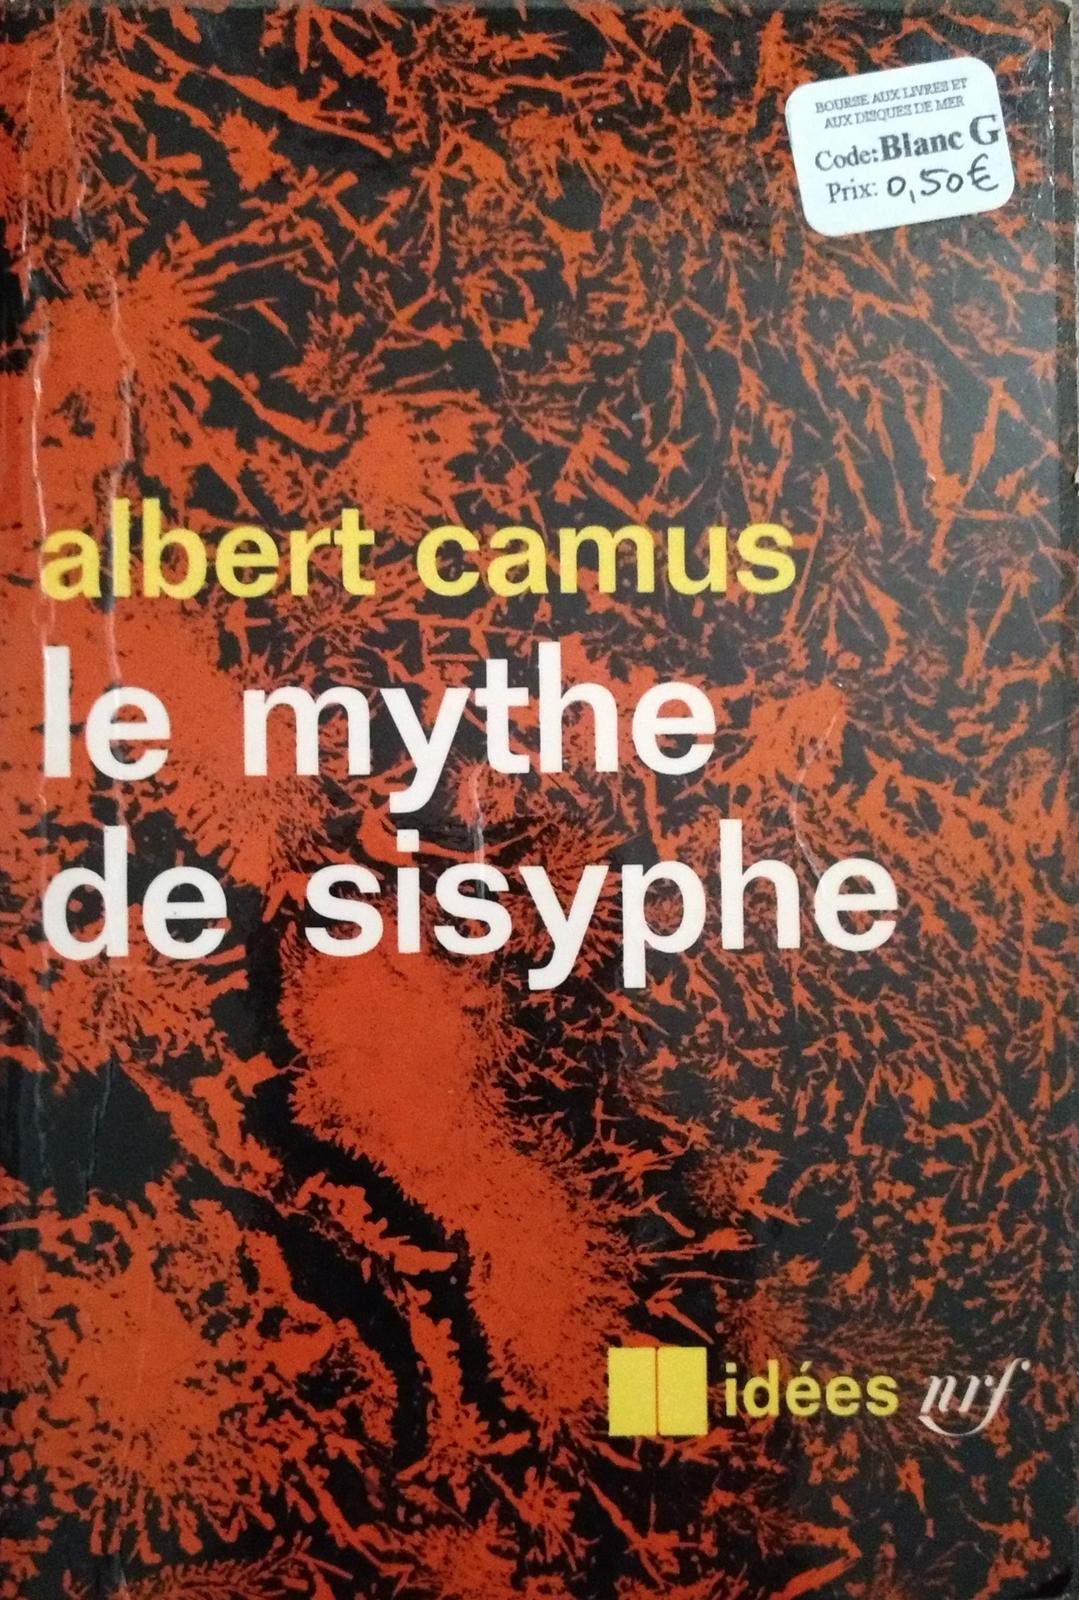 Le Mythe de Sisyphe (French language, 1942, Éditions Gallimard)